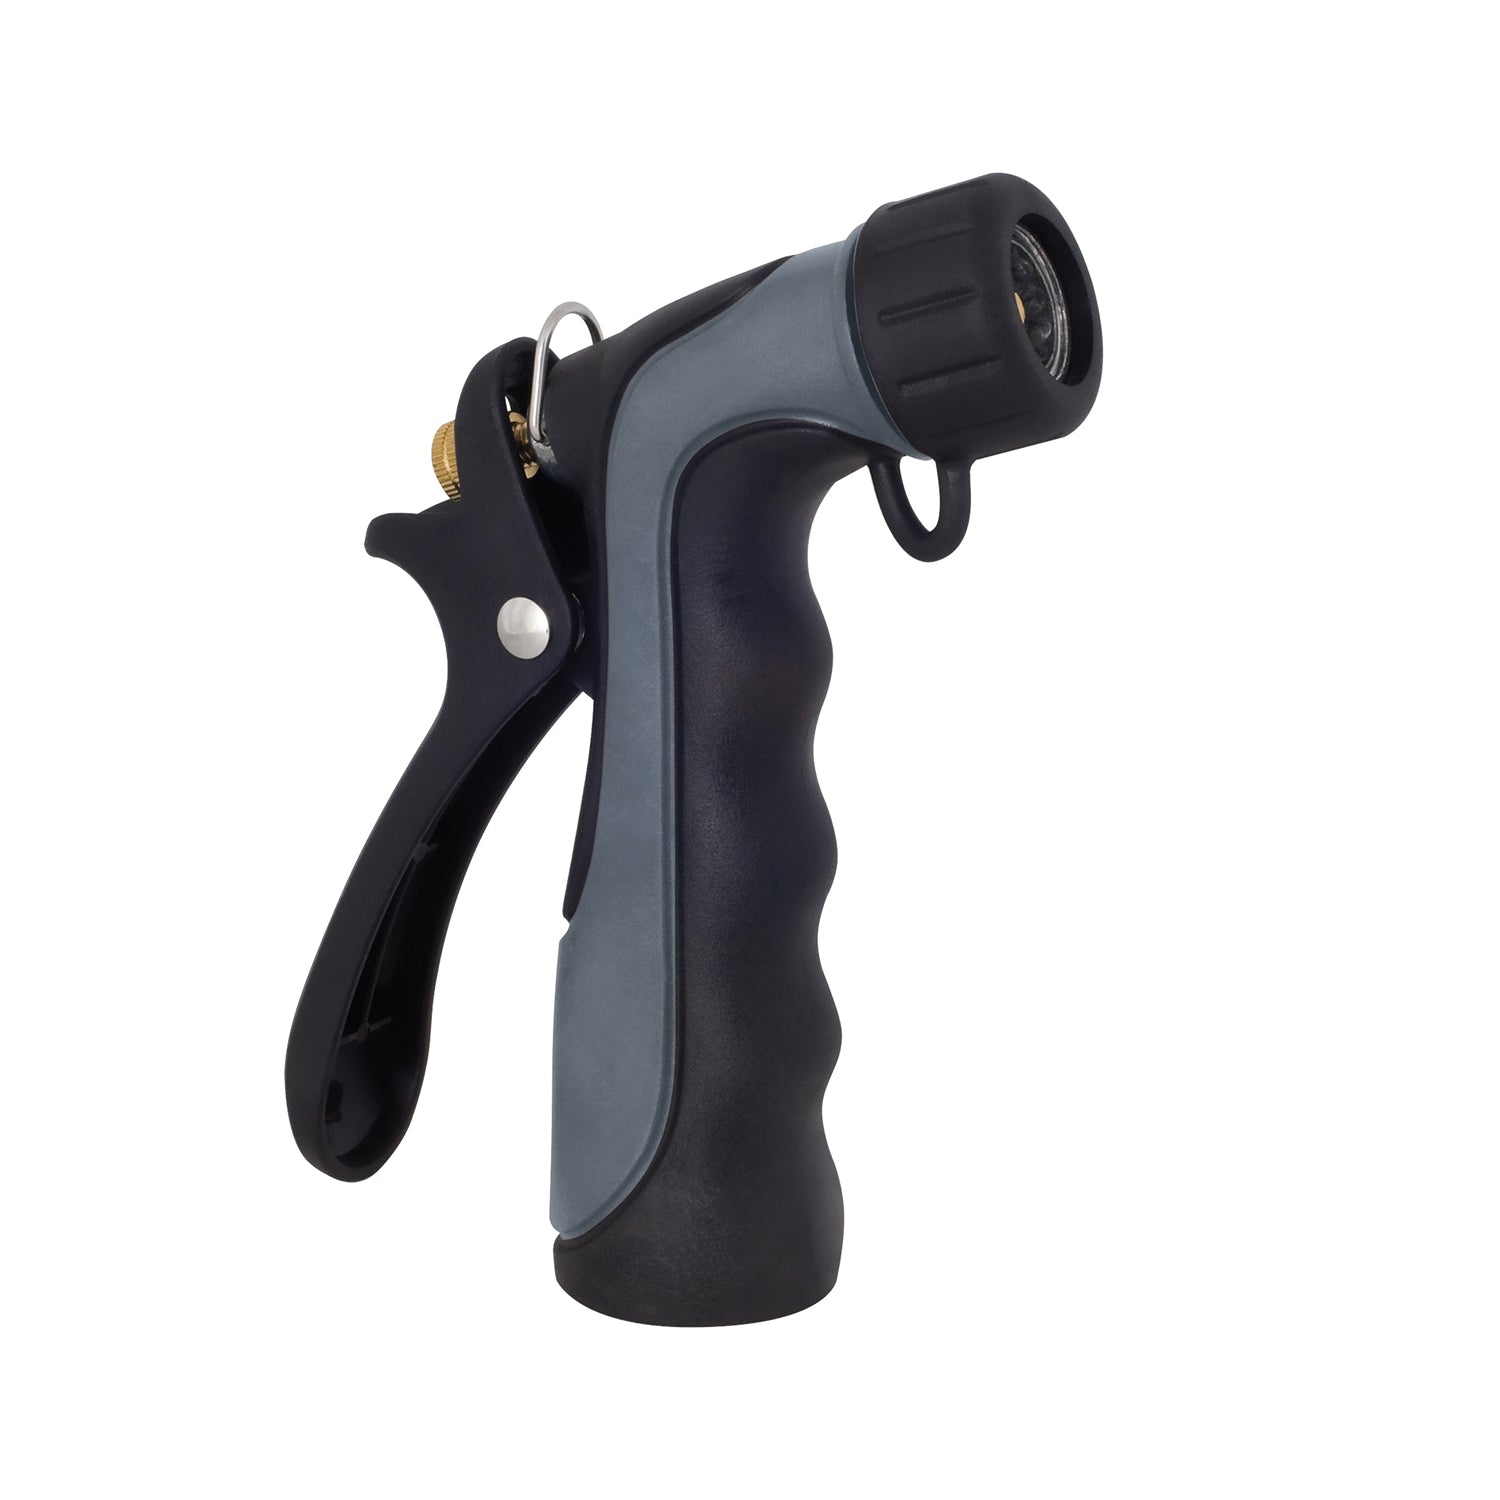 h-501-pistol-grip-spray-nozzle-garden-hose-attachment